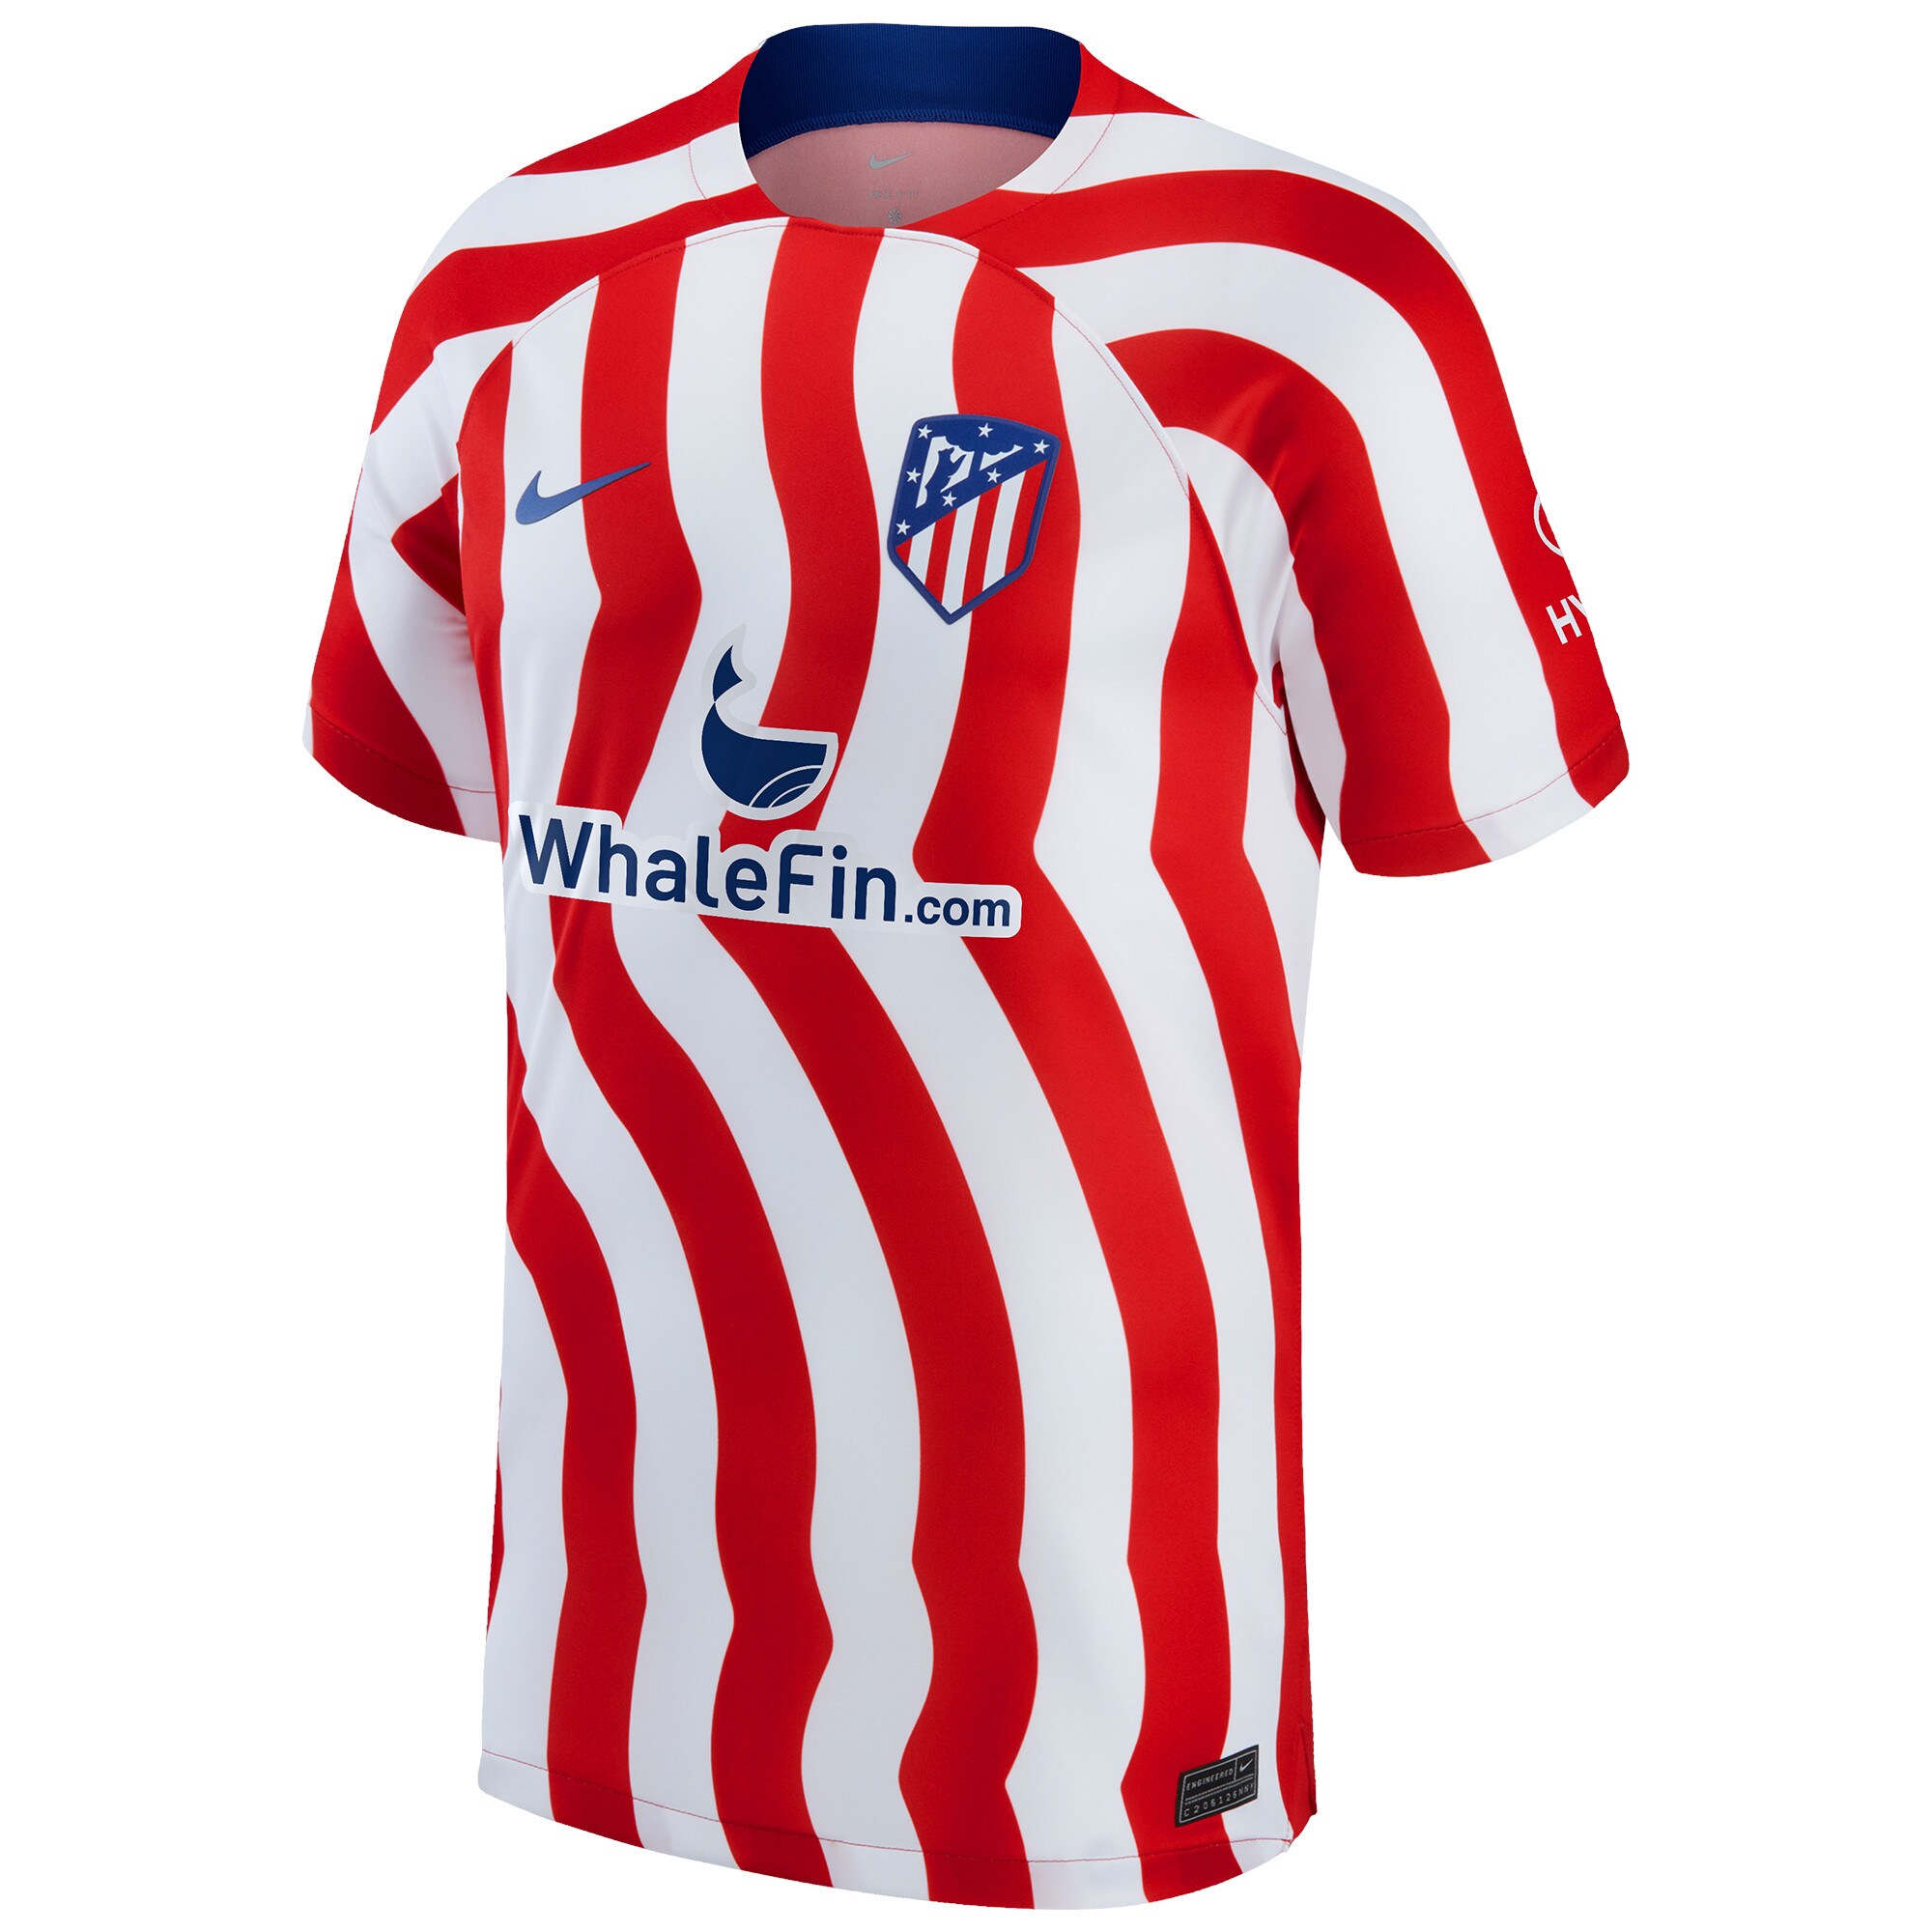 Atlético de Madrid Metropolitano Home Stadium Shirt 2022-23 with Koke 6 printing